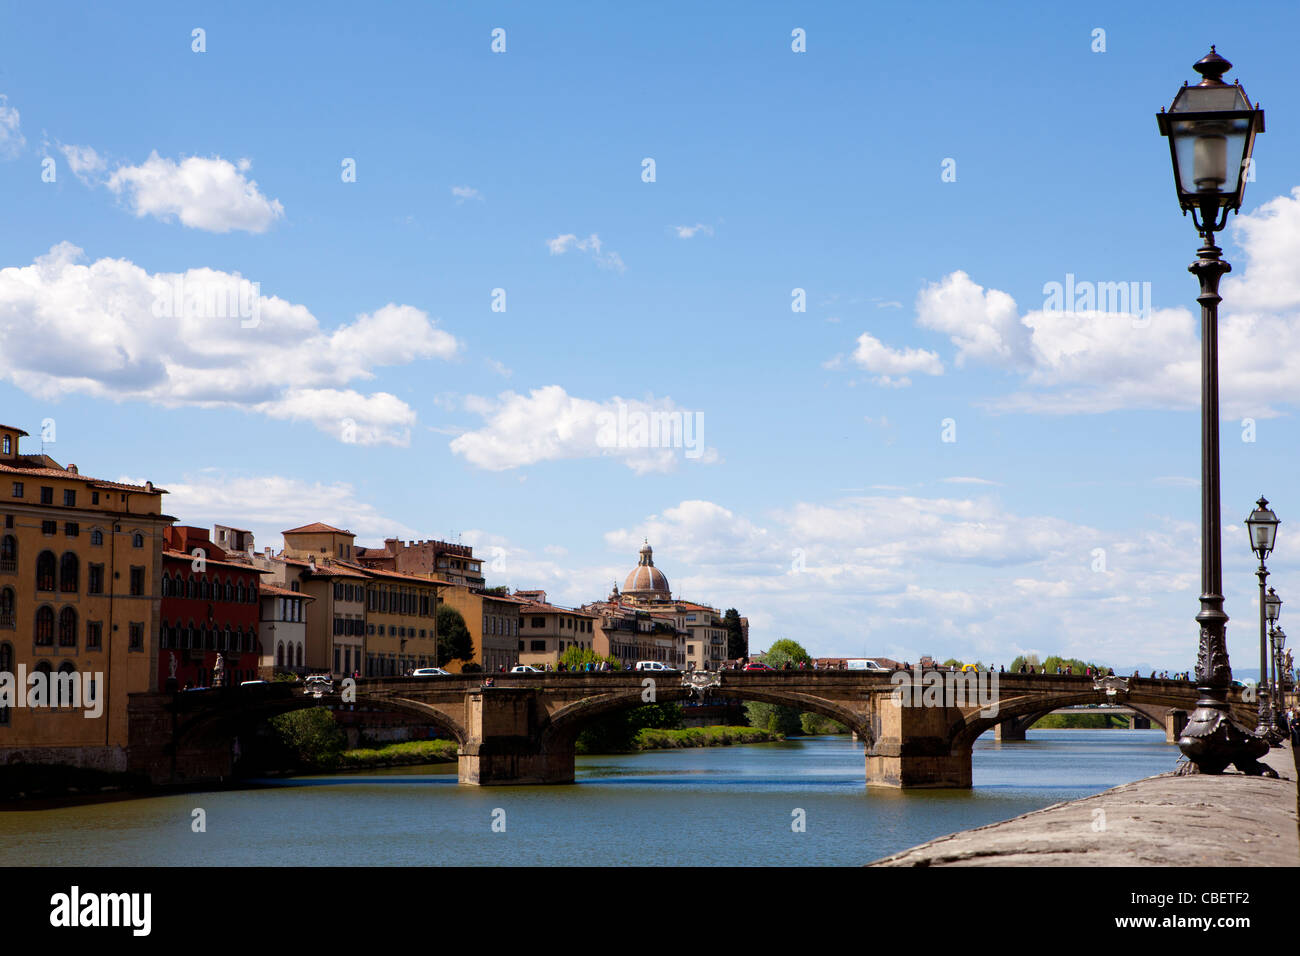 Ponte Vecchio over the River Arno, Florence, Italy. Stock Photo